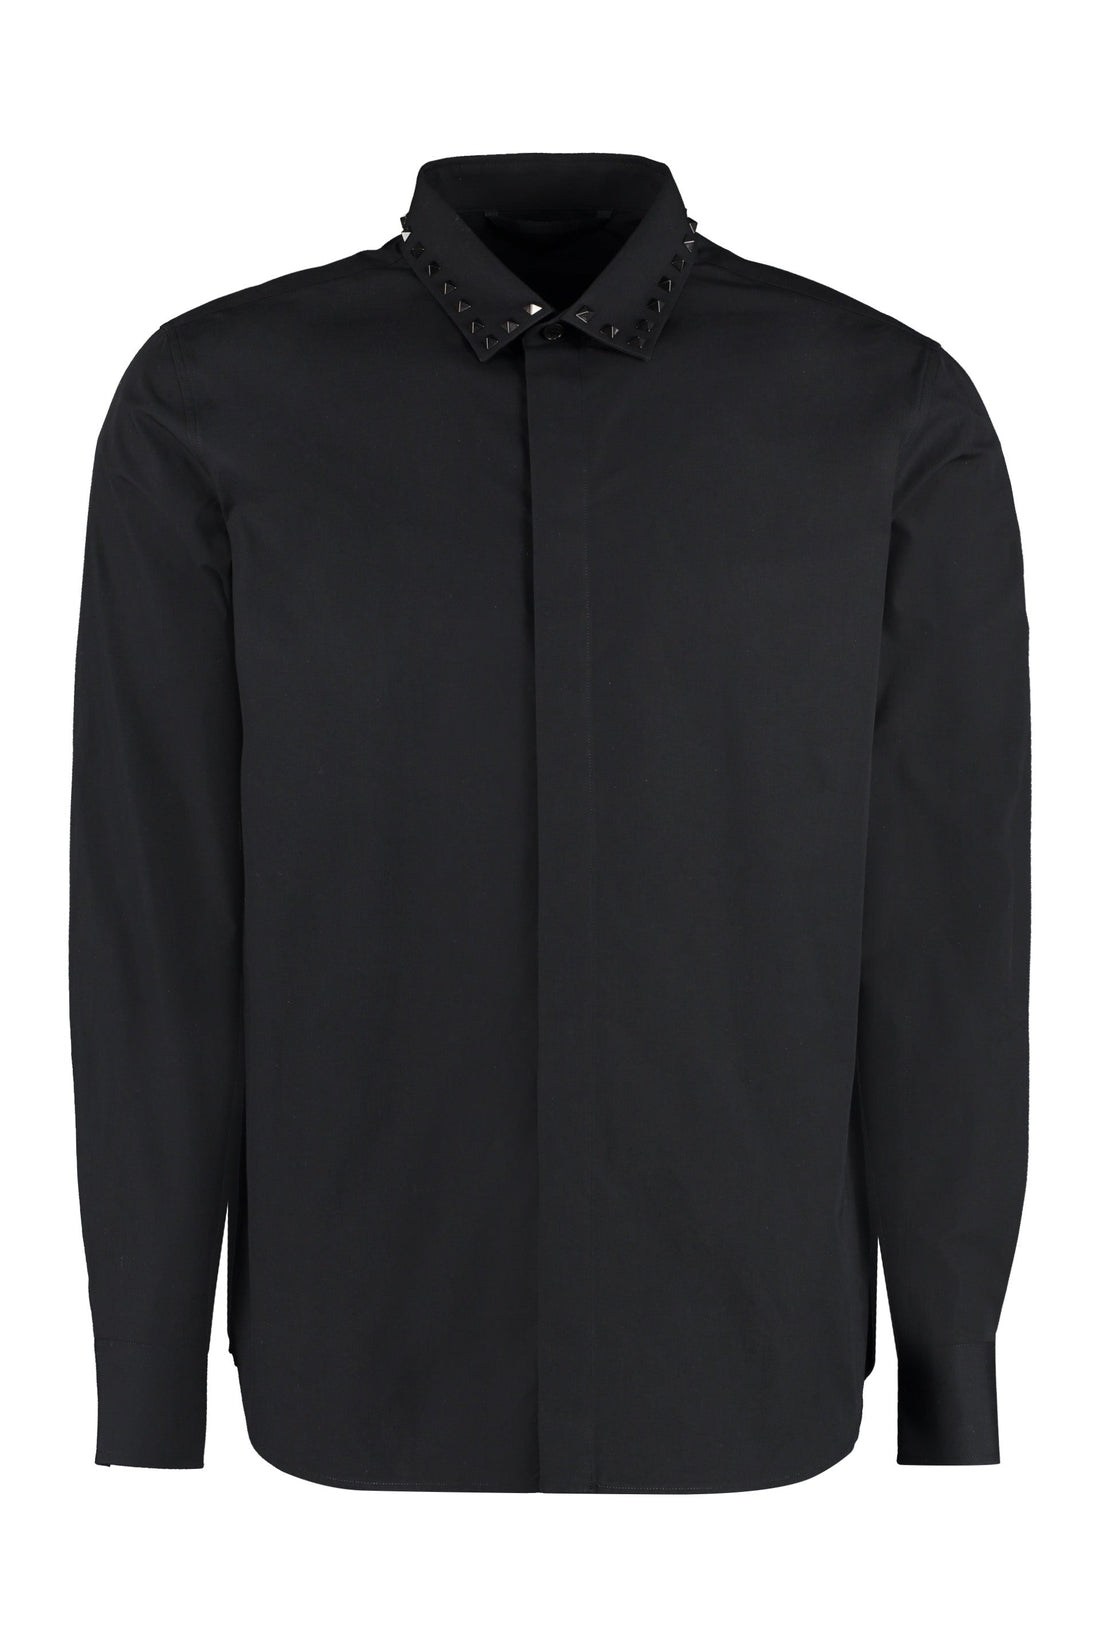 Valentino-OUTLET-SALE-Long sleeve cotton shirt-ARCHIVIST